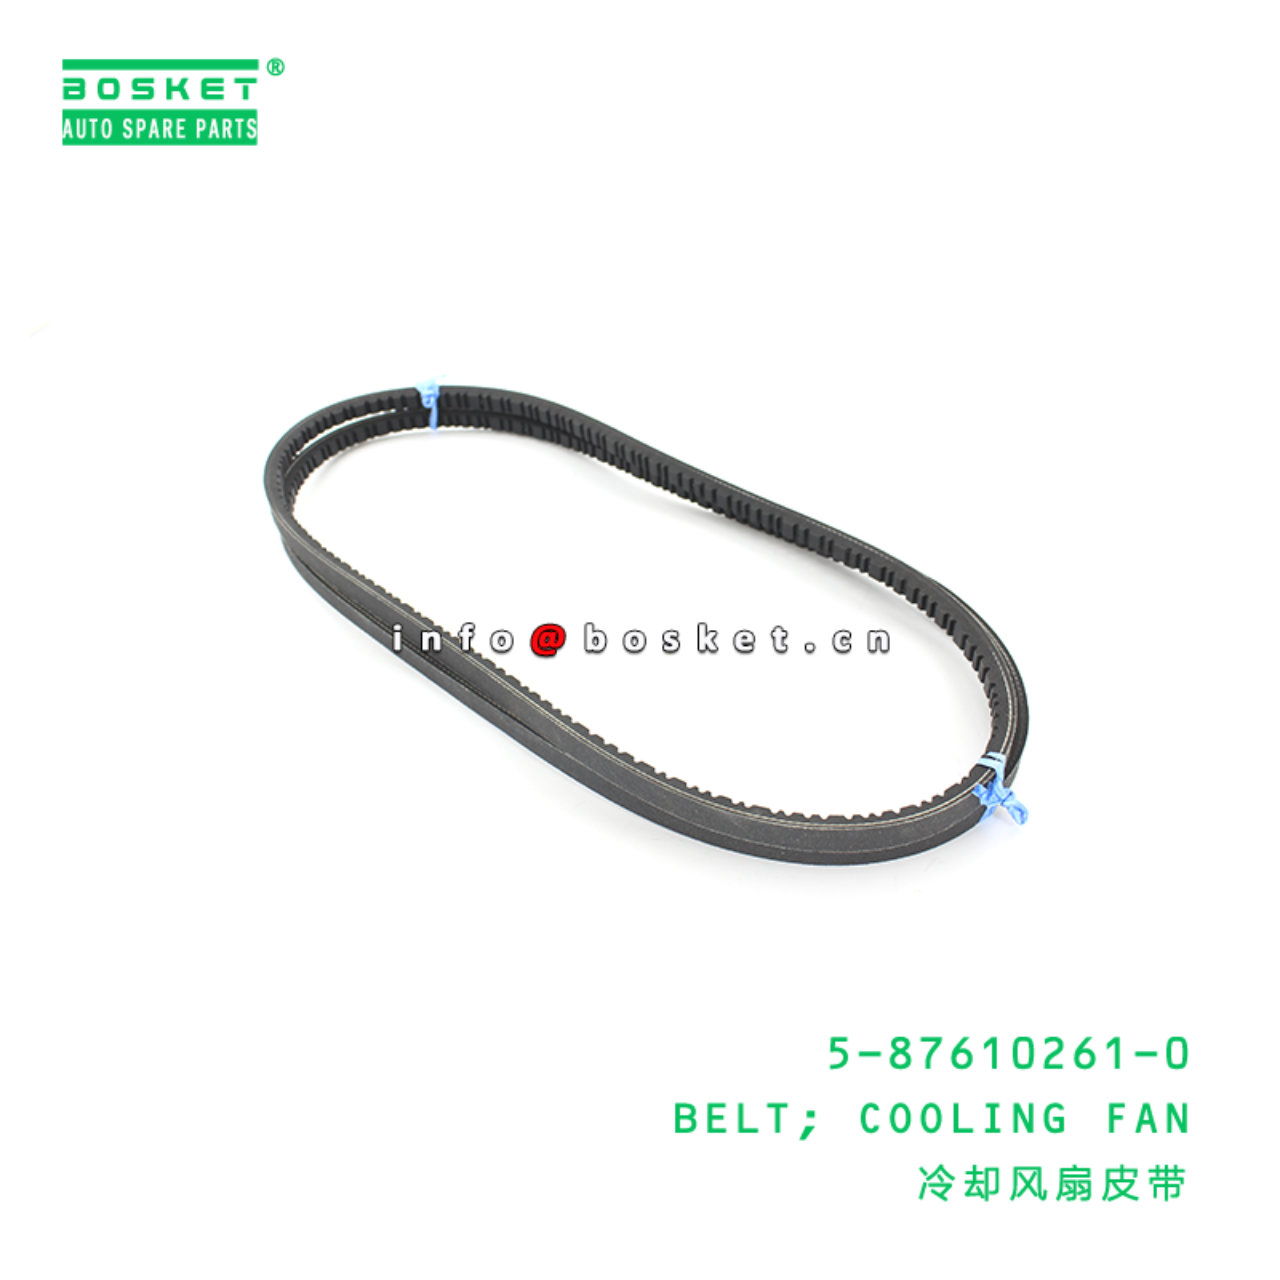 5-87610261-0 Cooling Fan Belt Suitable for ISUZU 5876102610